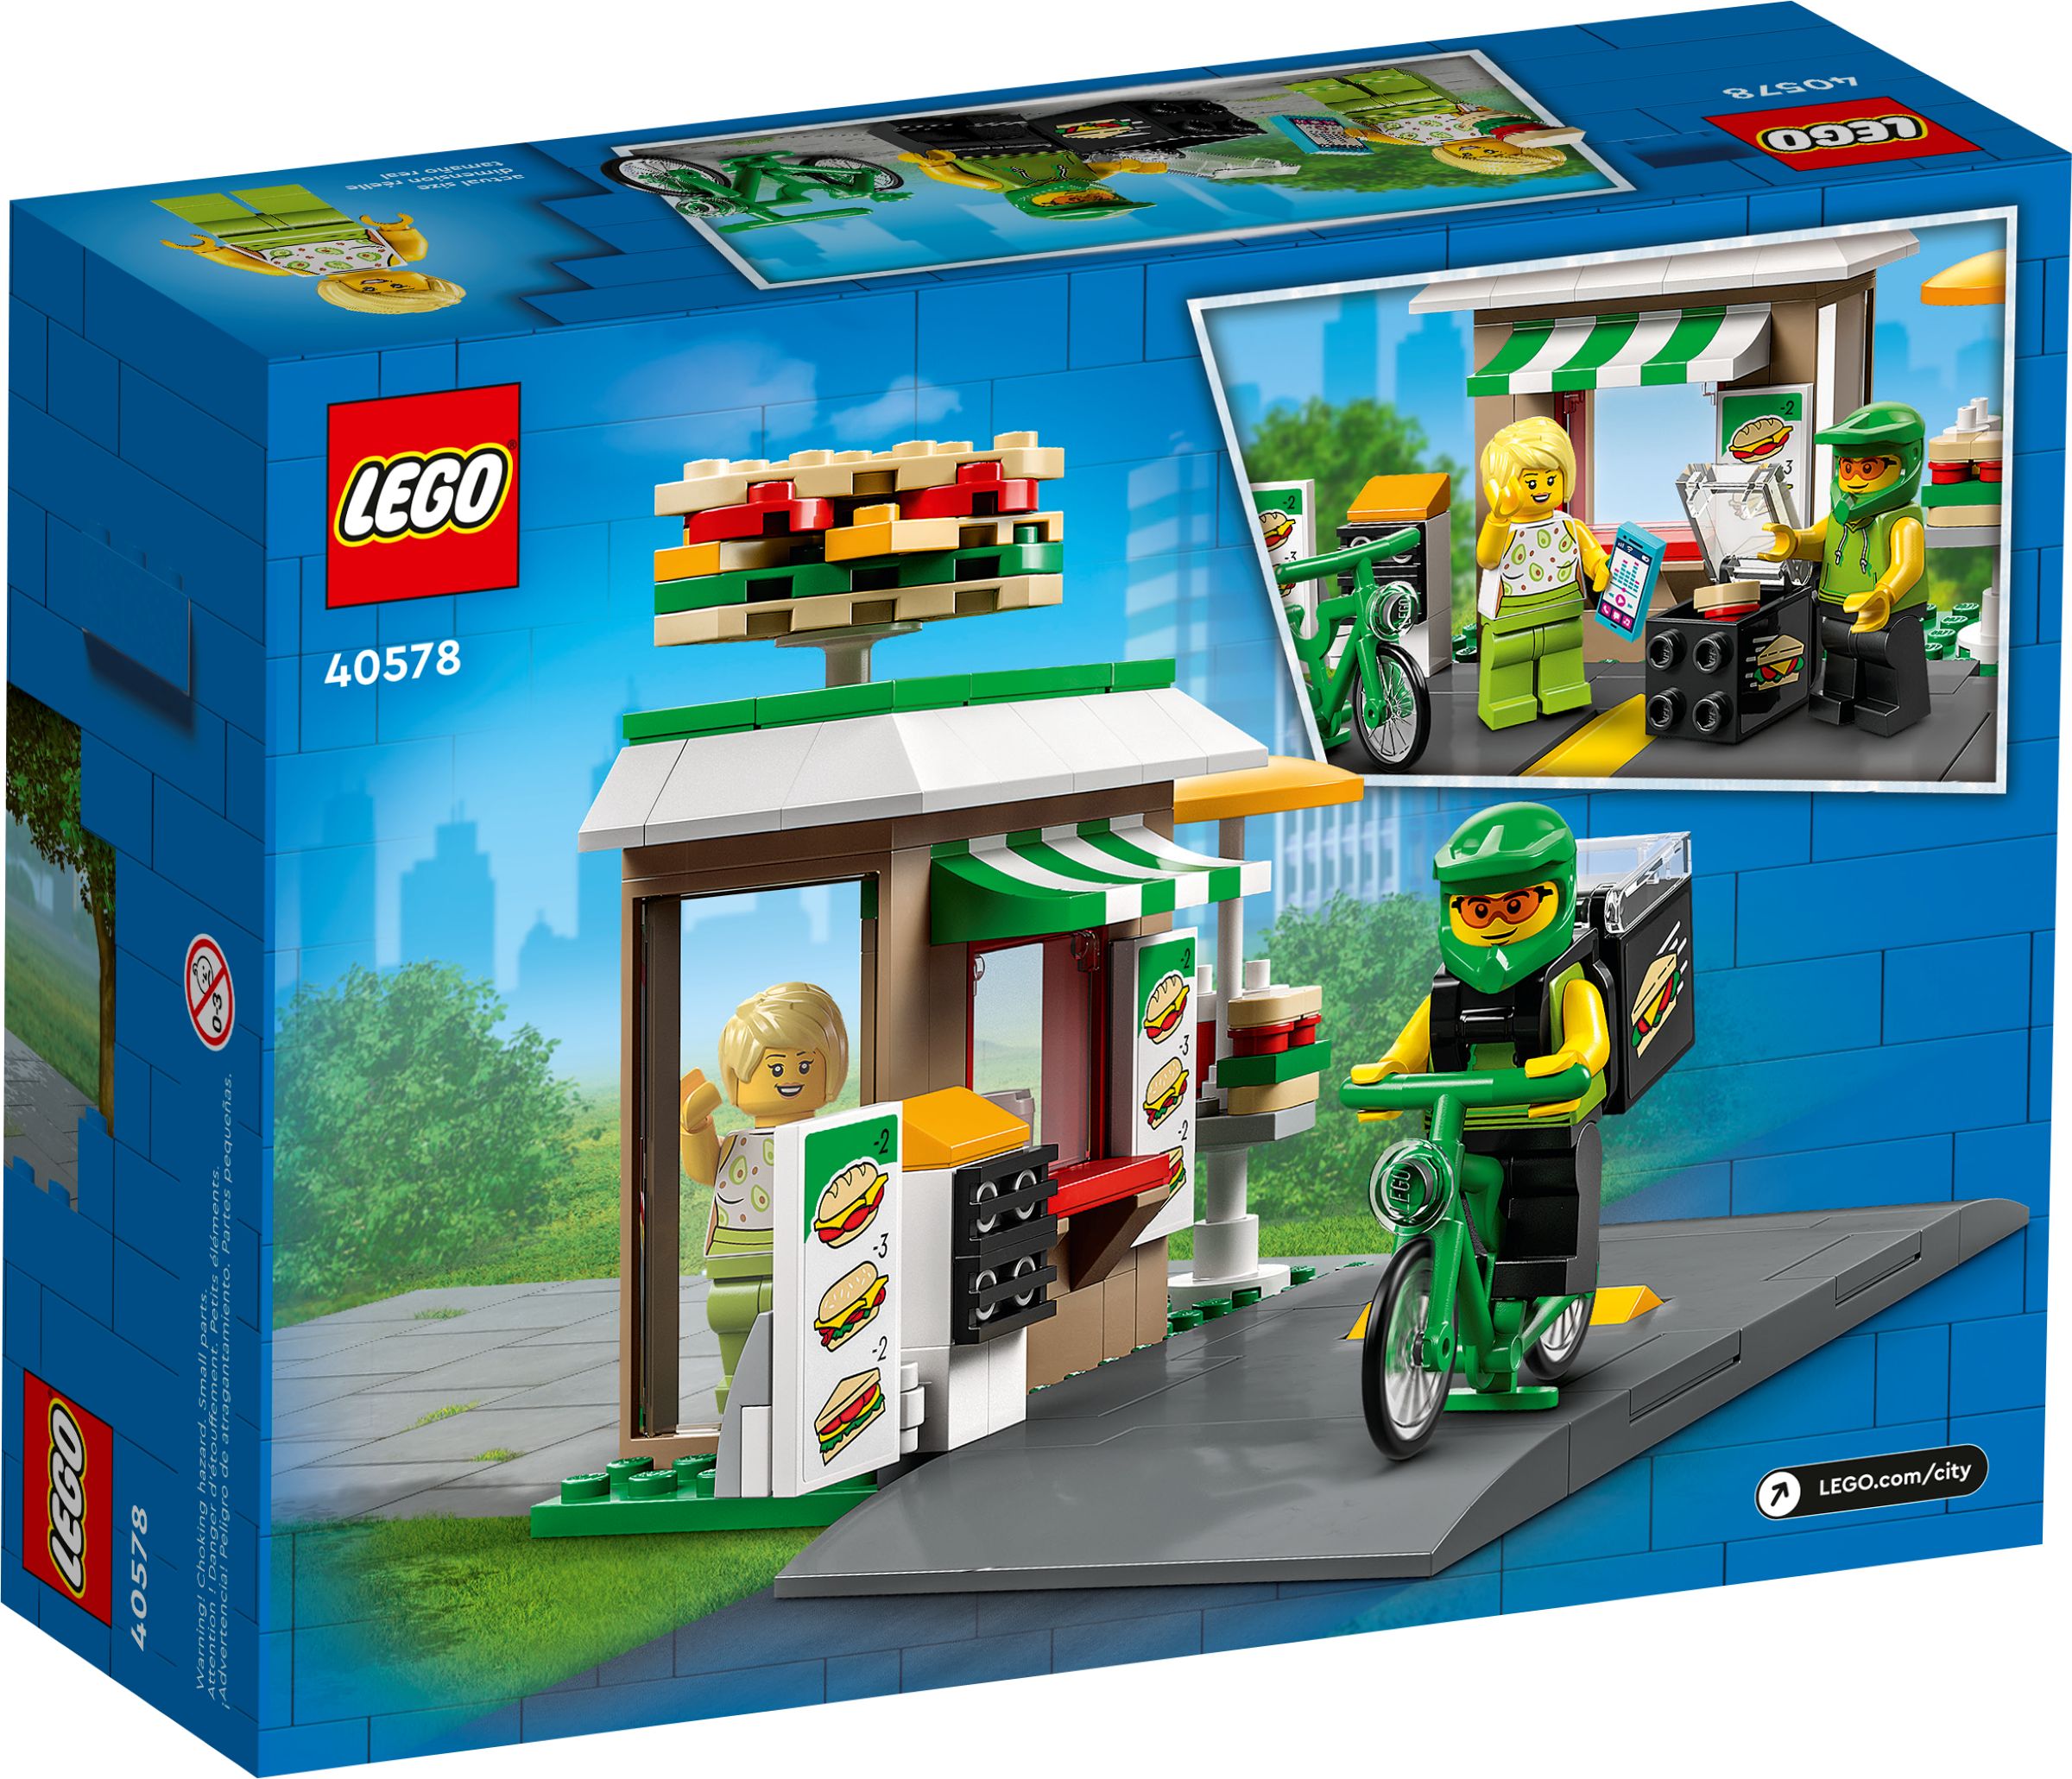 LEGO Promotional 40578 Sandwichladen LEGO_40578_alt2.jpg